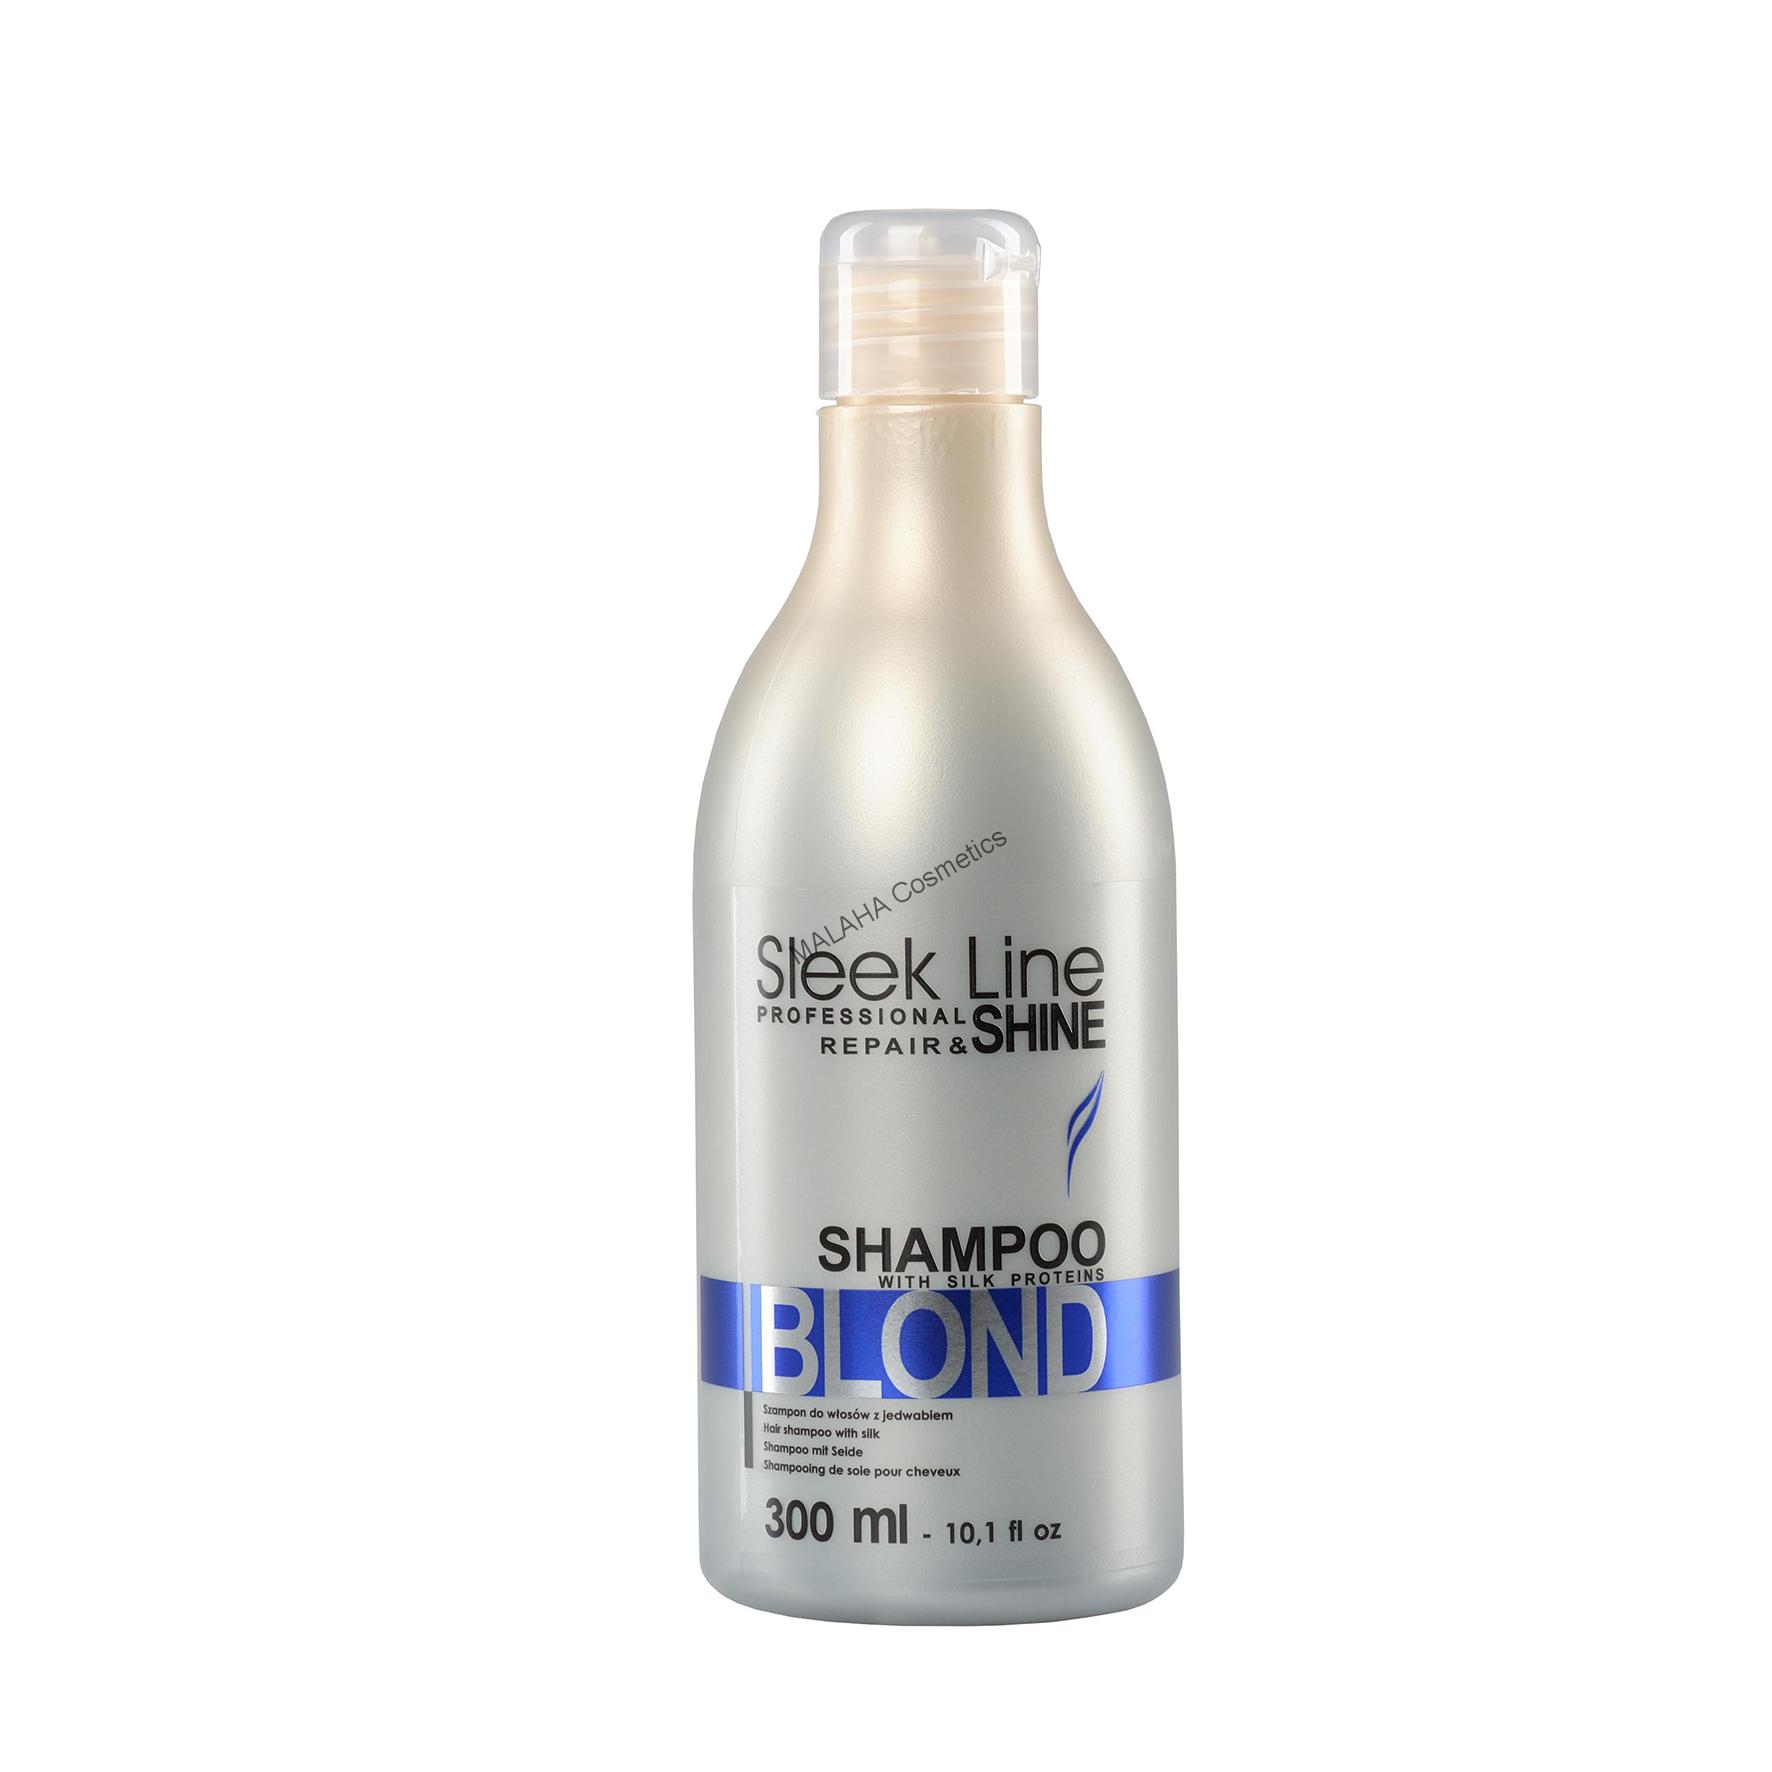 Silk shampoo - BLOND